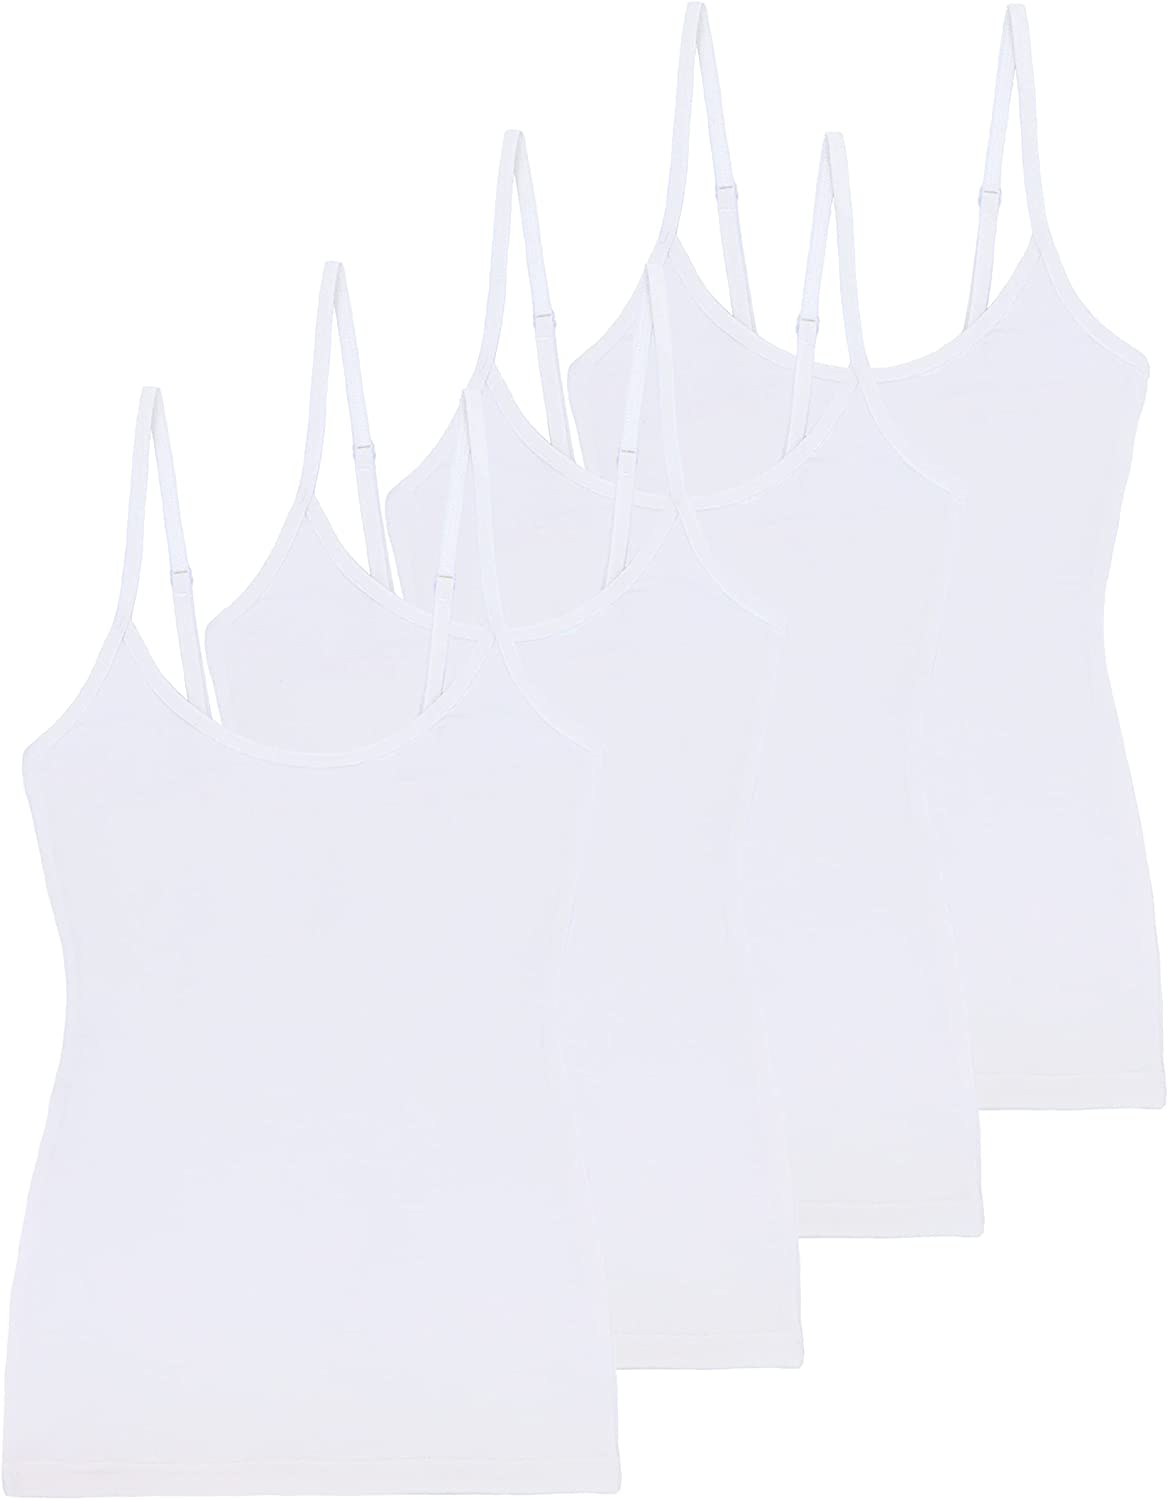  Comfneat Womens 4-Pack Slim-Fit Camisoles Cotton Adjustable  Spaghetti Strap Top Underwear